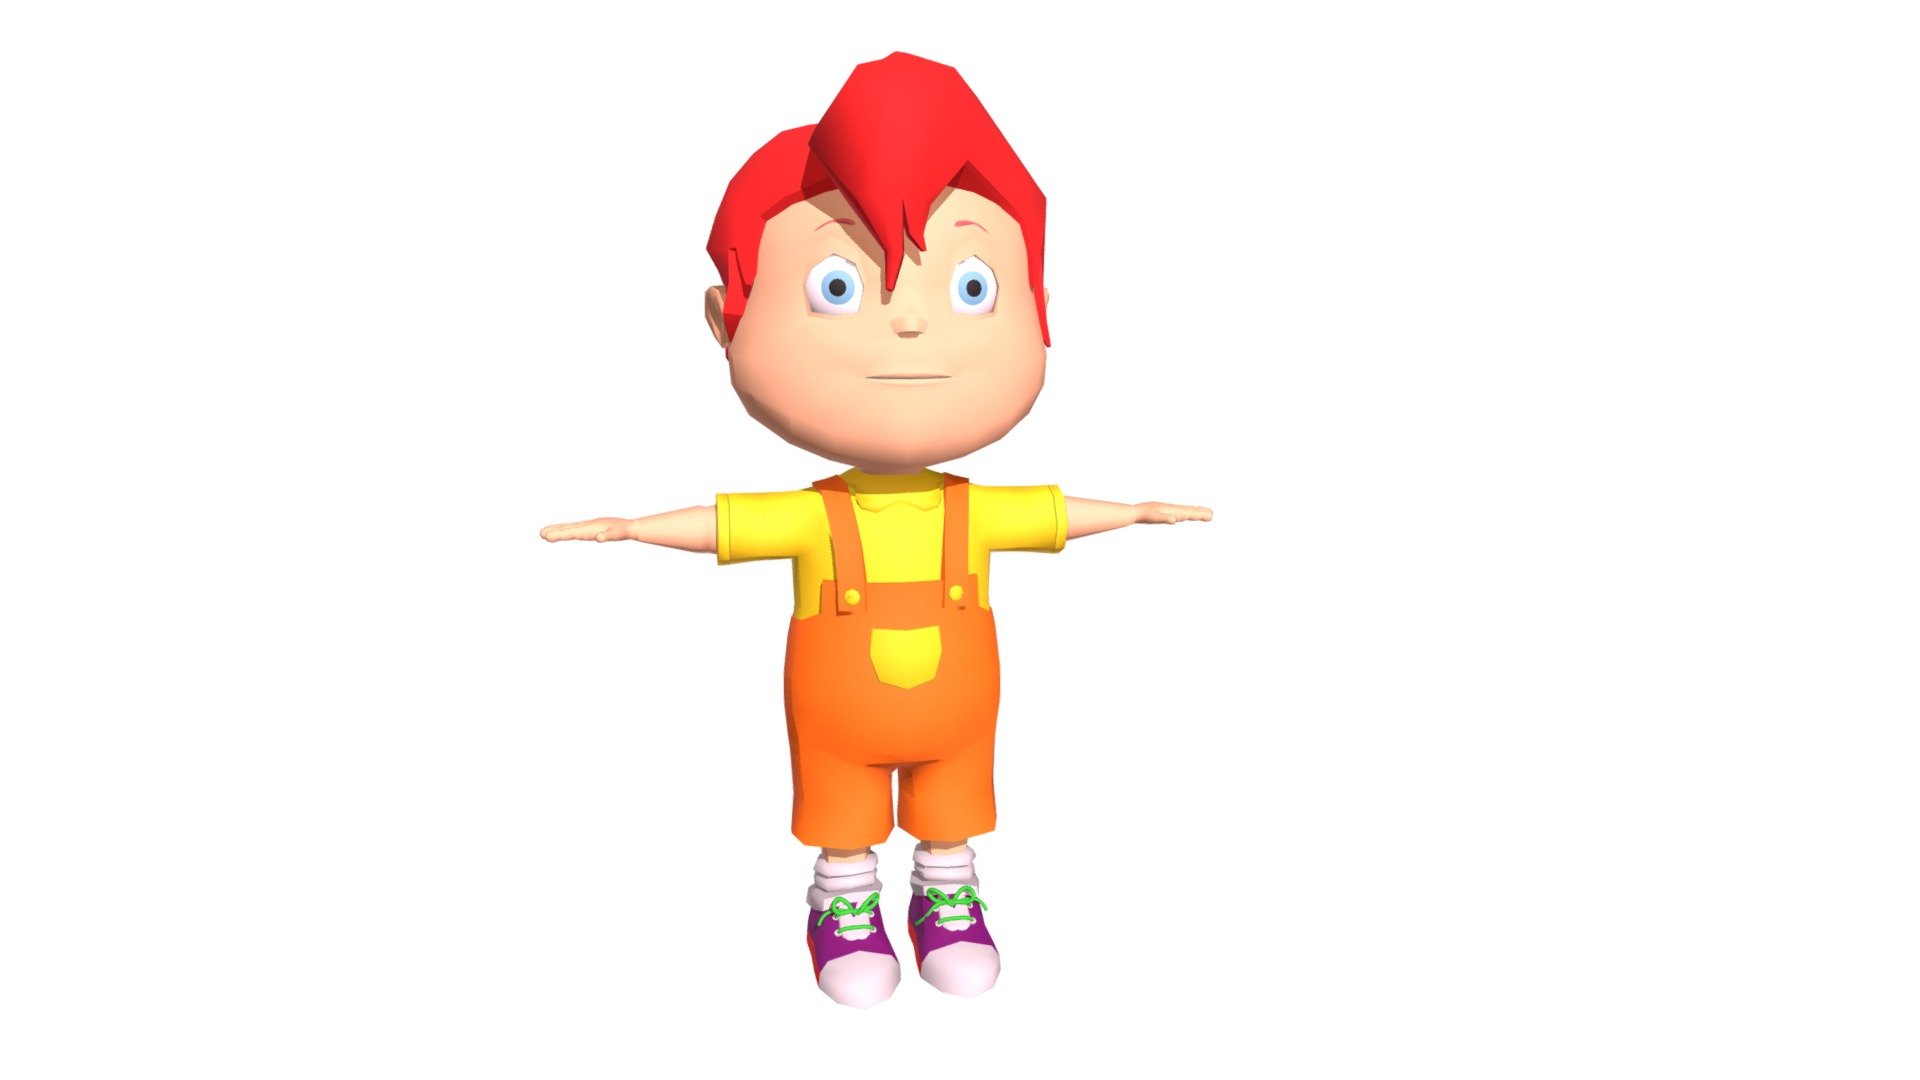 Quality 3d model of cartoon kid character 3d model